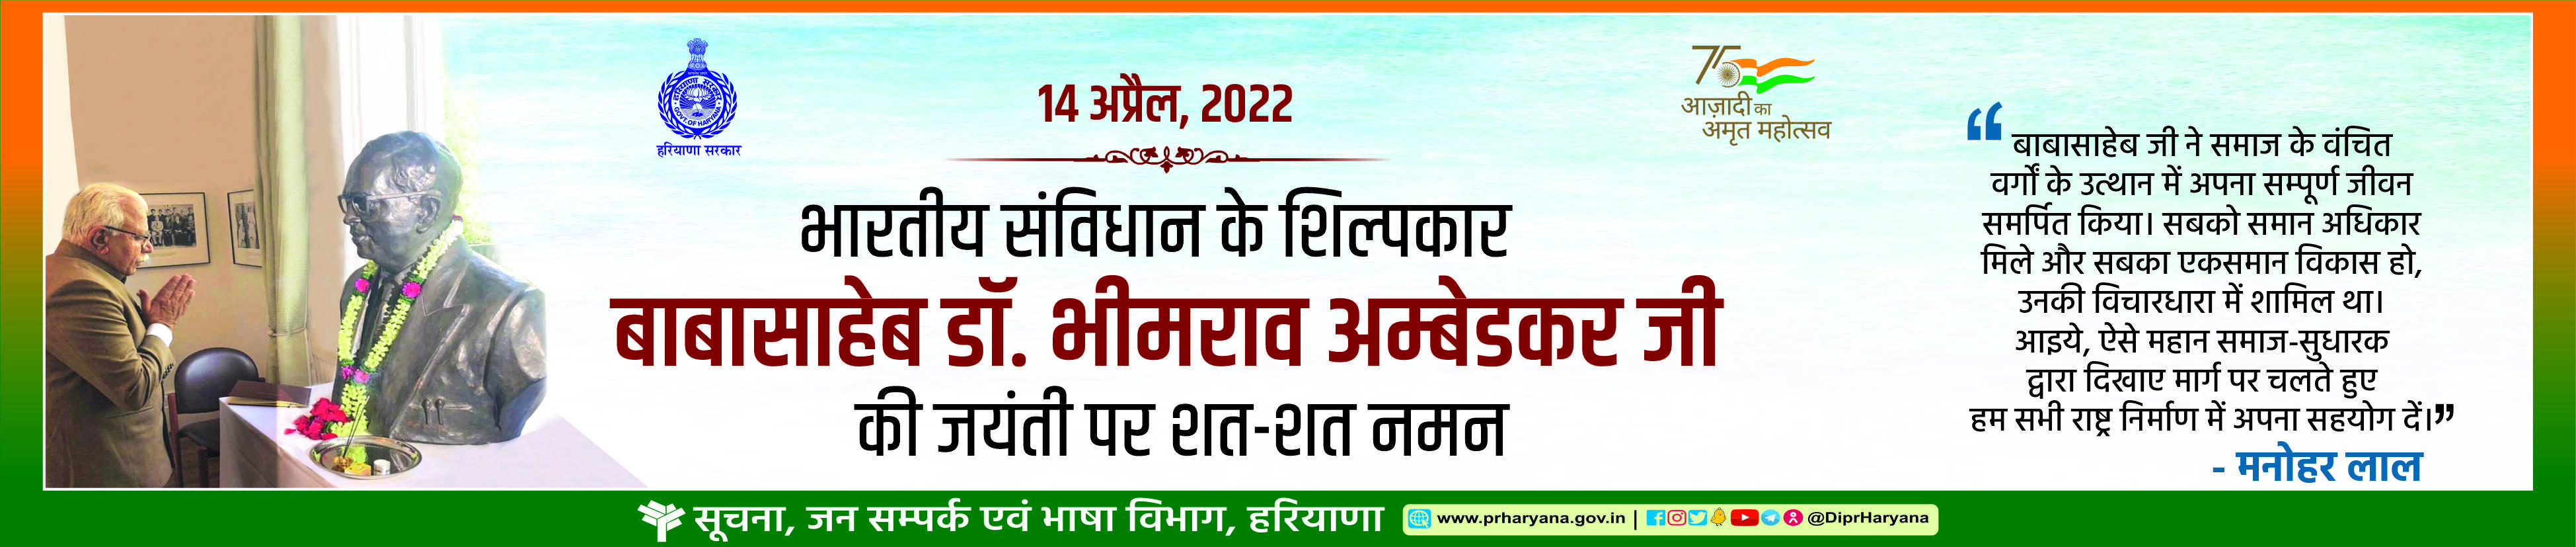 Ambedkar Jayanti advt for Social Media 2022 H 4 (1)